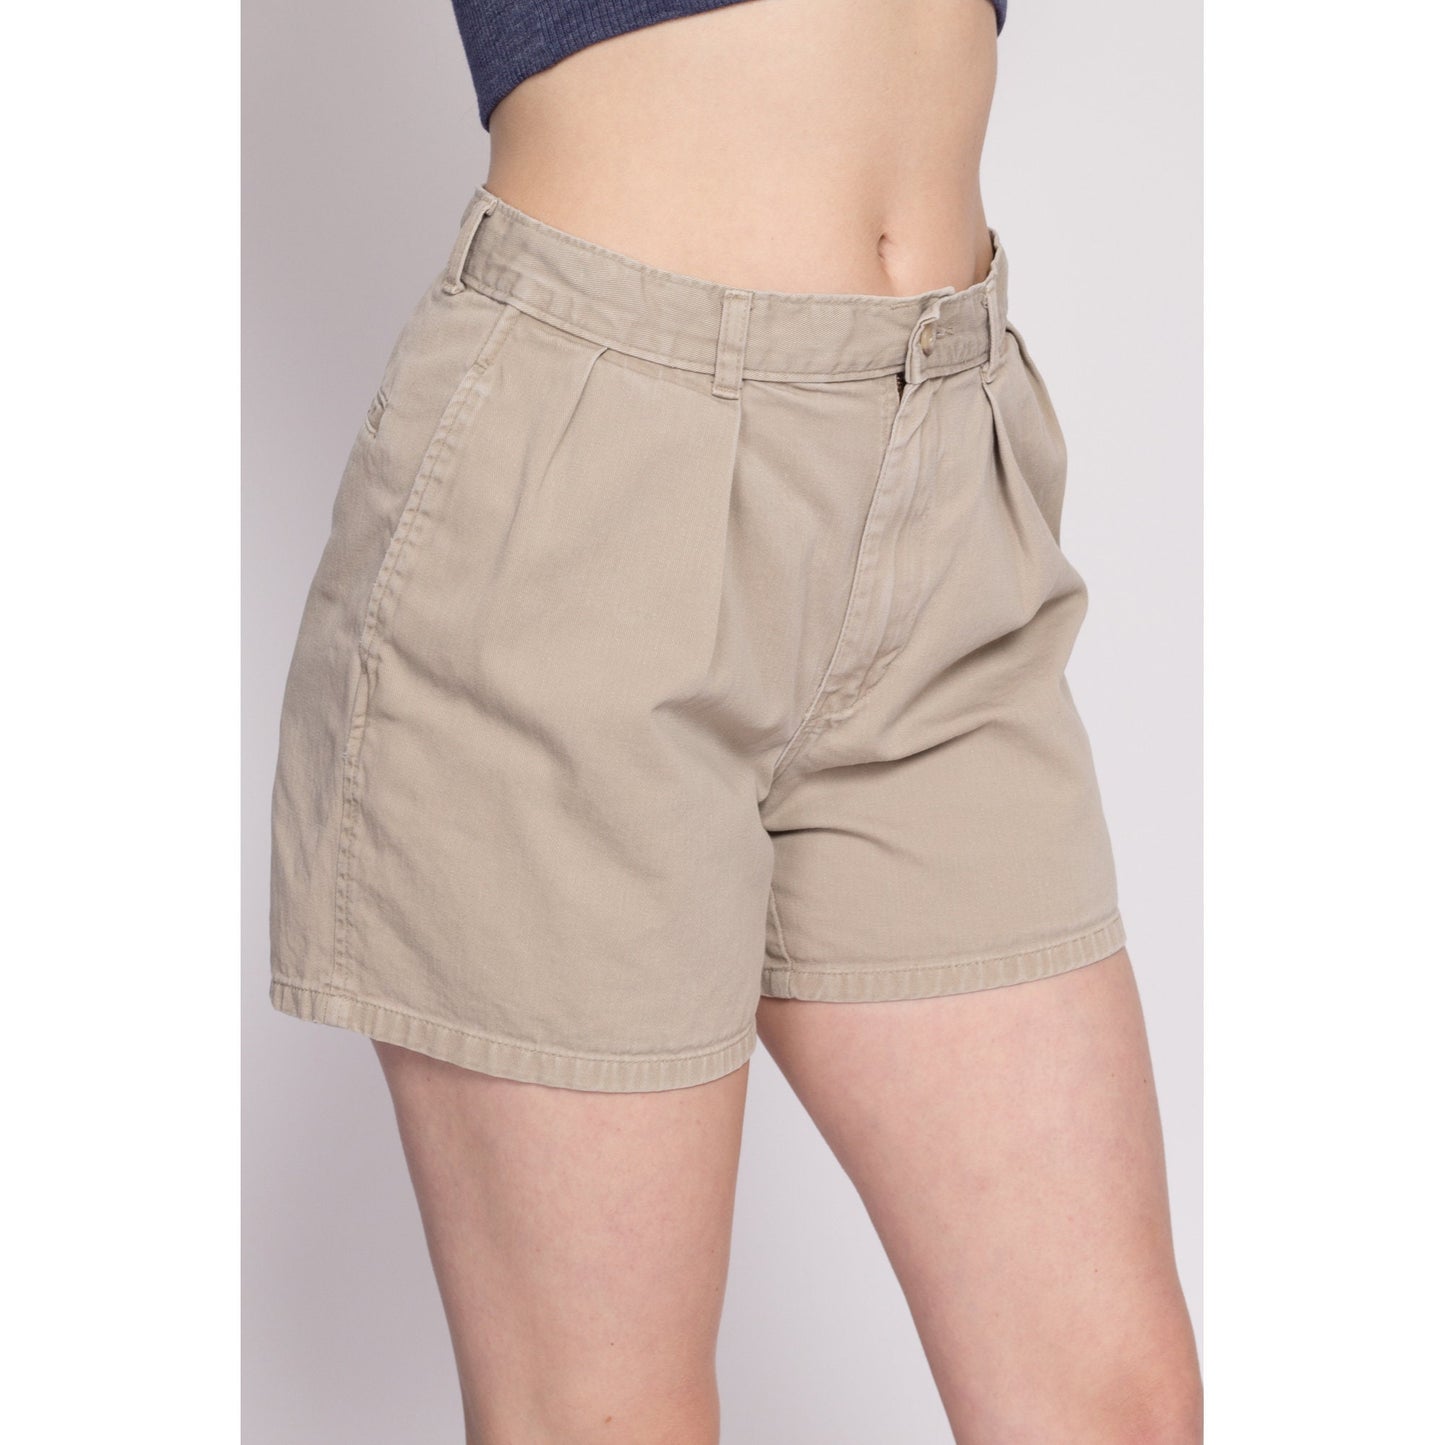 M| 90s Polo Ralph Lauren Khaki Cotton Shorts - Medium | Vintage Mid Rise Pleated Casual Shorts